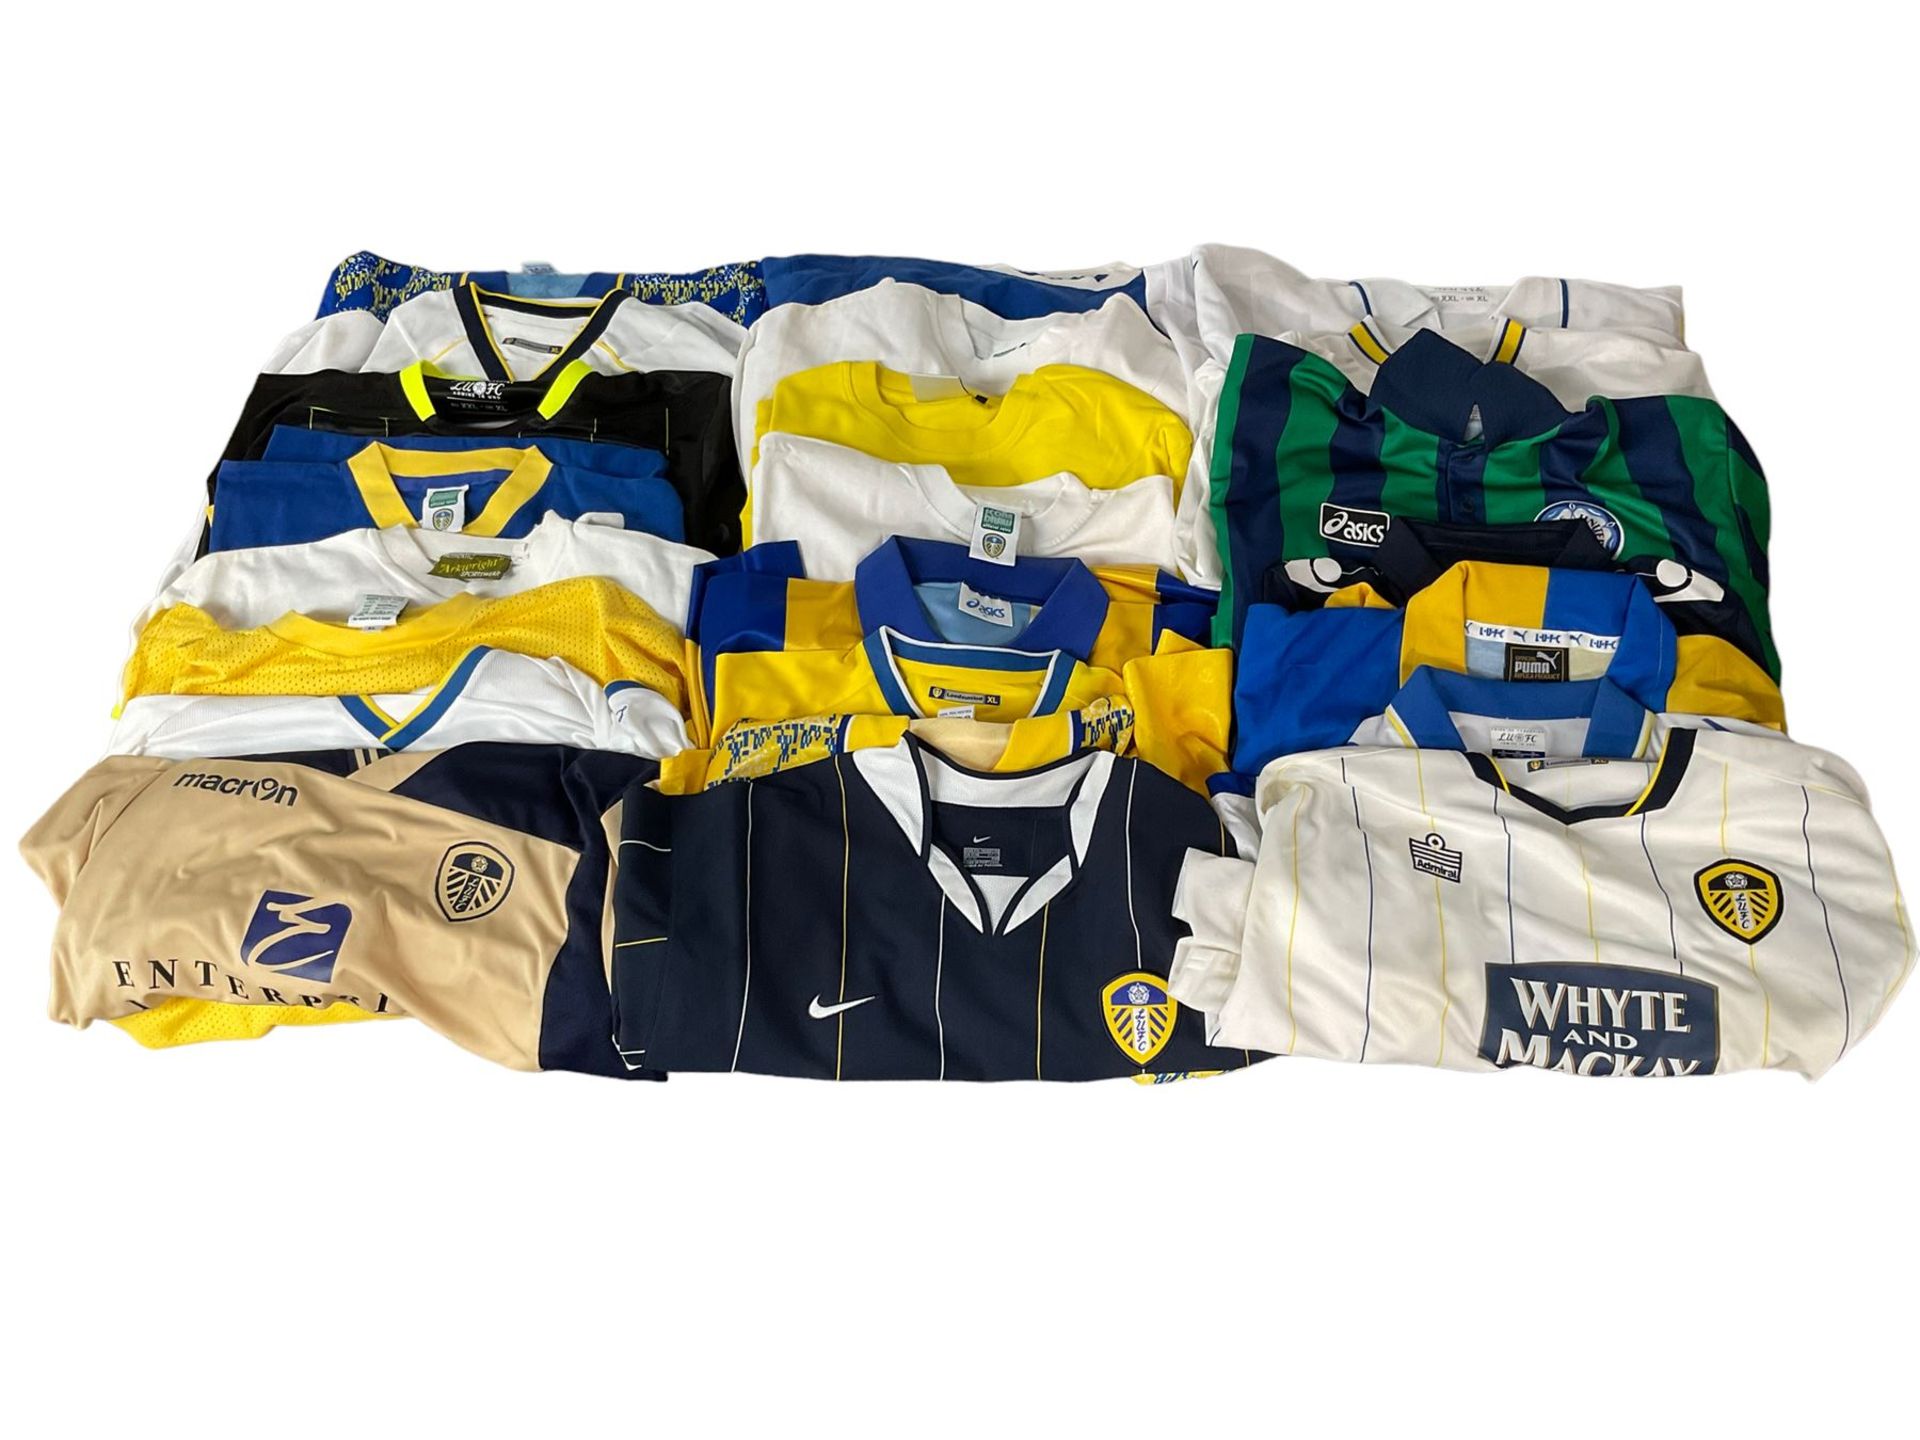 Leeds United football club - twenty-three replica shirts including 1970s 'Arkwright'